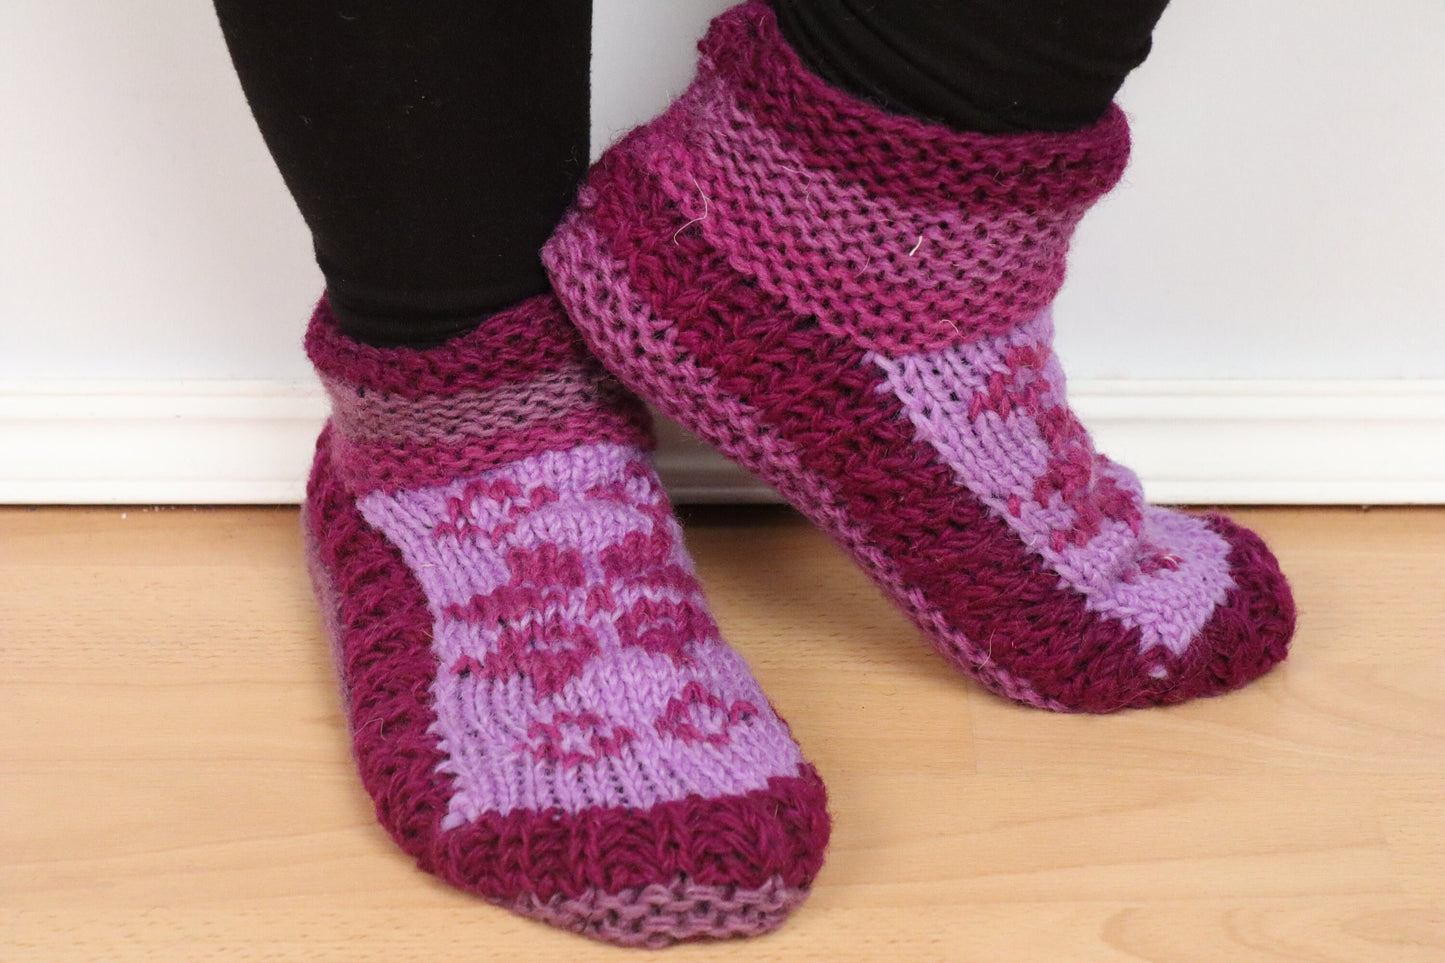 Fleece Lined Cosy Sofa Socks - Lilac and Purple